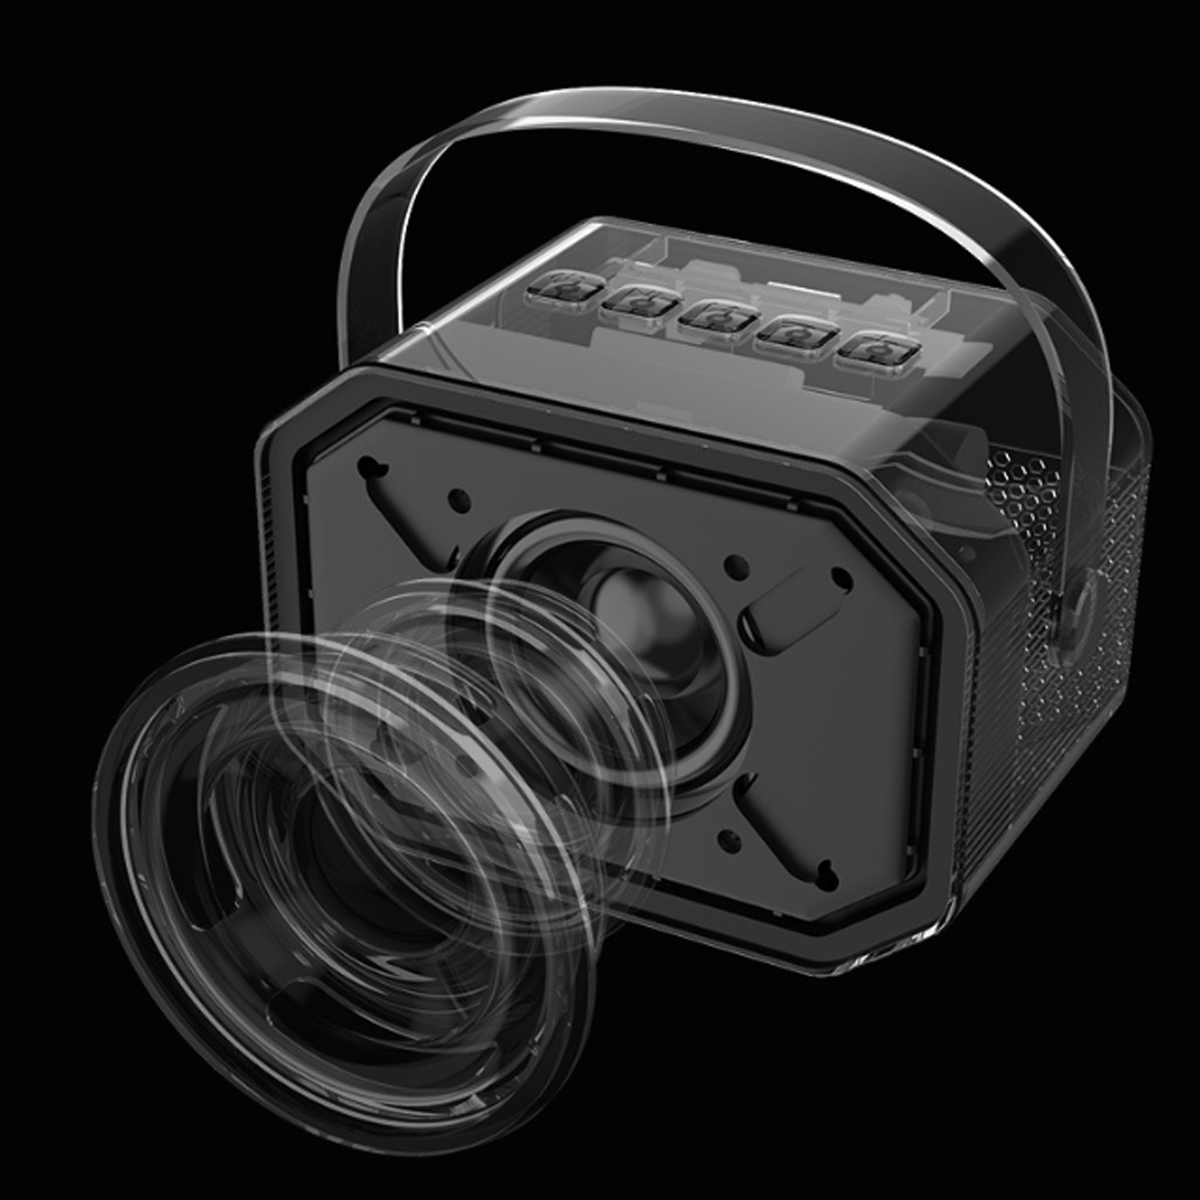 Intelligente Mikrofon, Bluetooth-Audio Akkulaufzeit Weiß Geräuschunterdrückung, lange mit Kabelloses Bluetooth-Lautsprecher, BYTELIKE